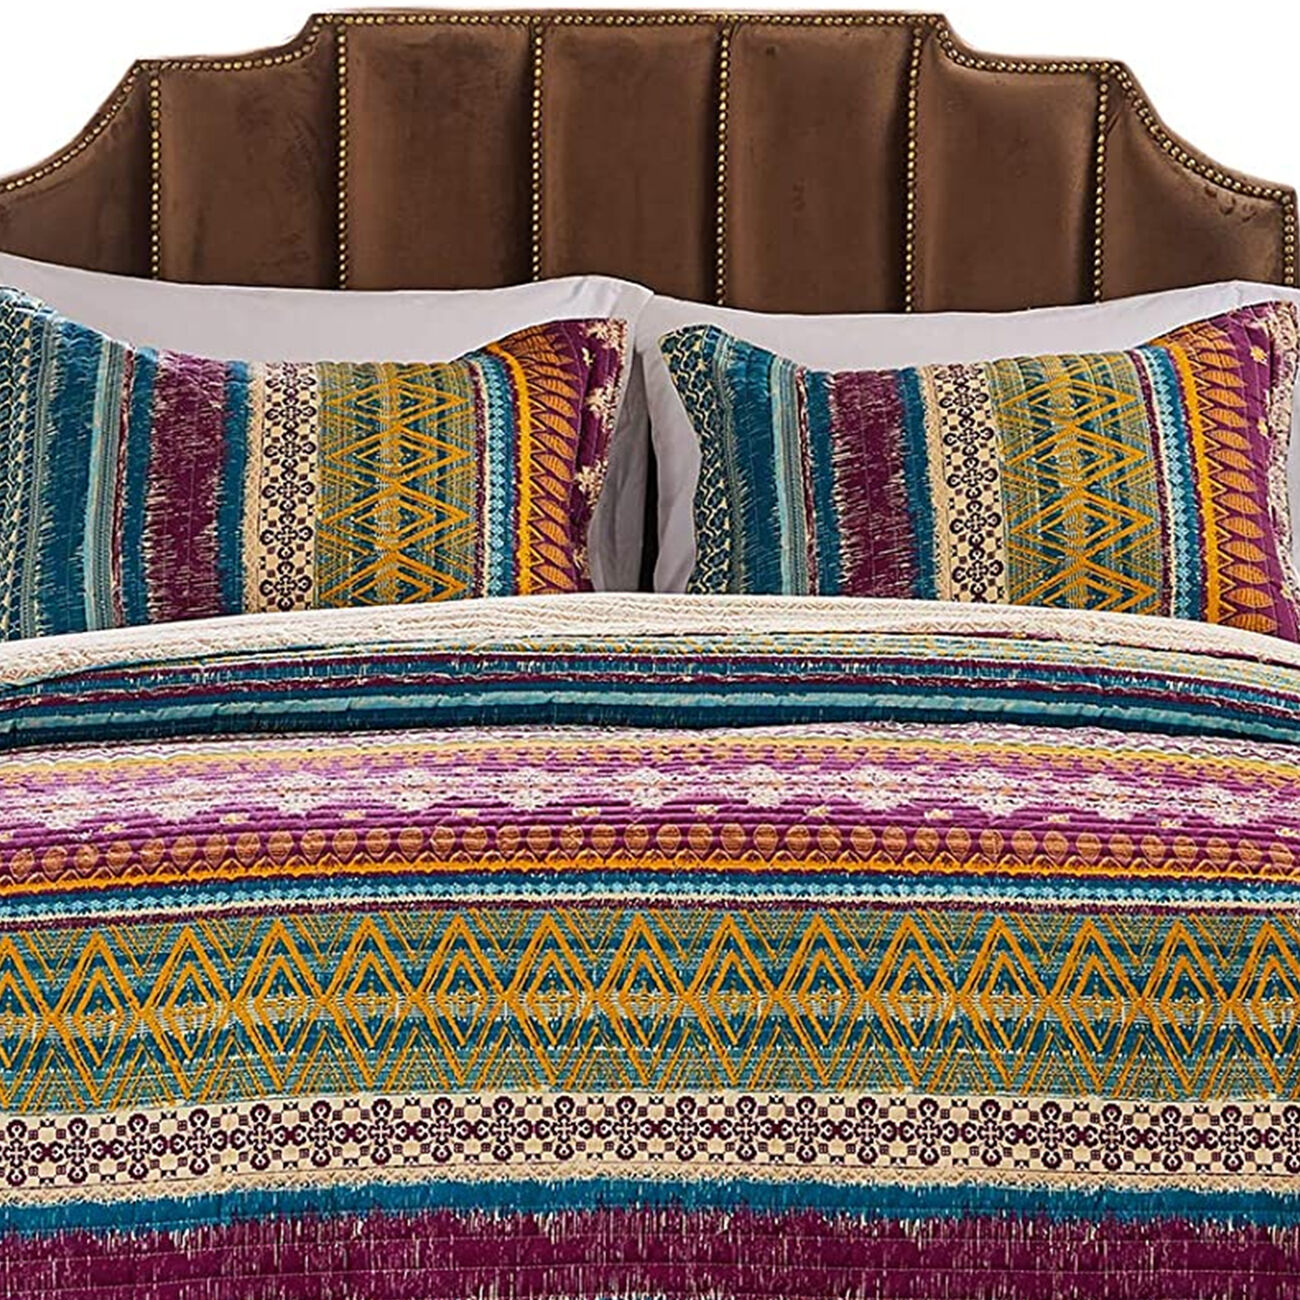 Tribal Motif Print Cotton Full Quilt Set with 2 Pillow Sham, Multicolor